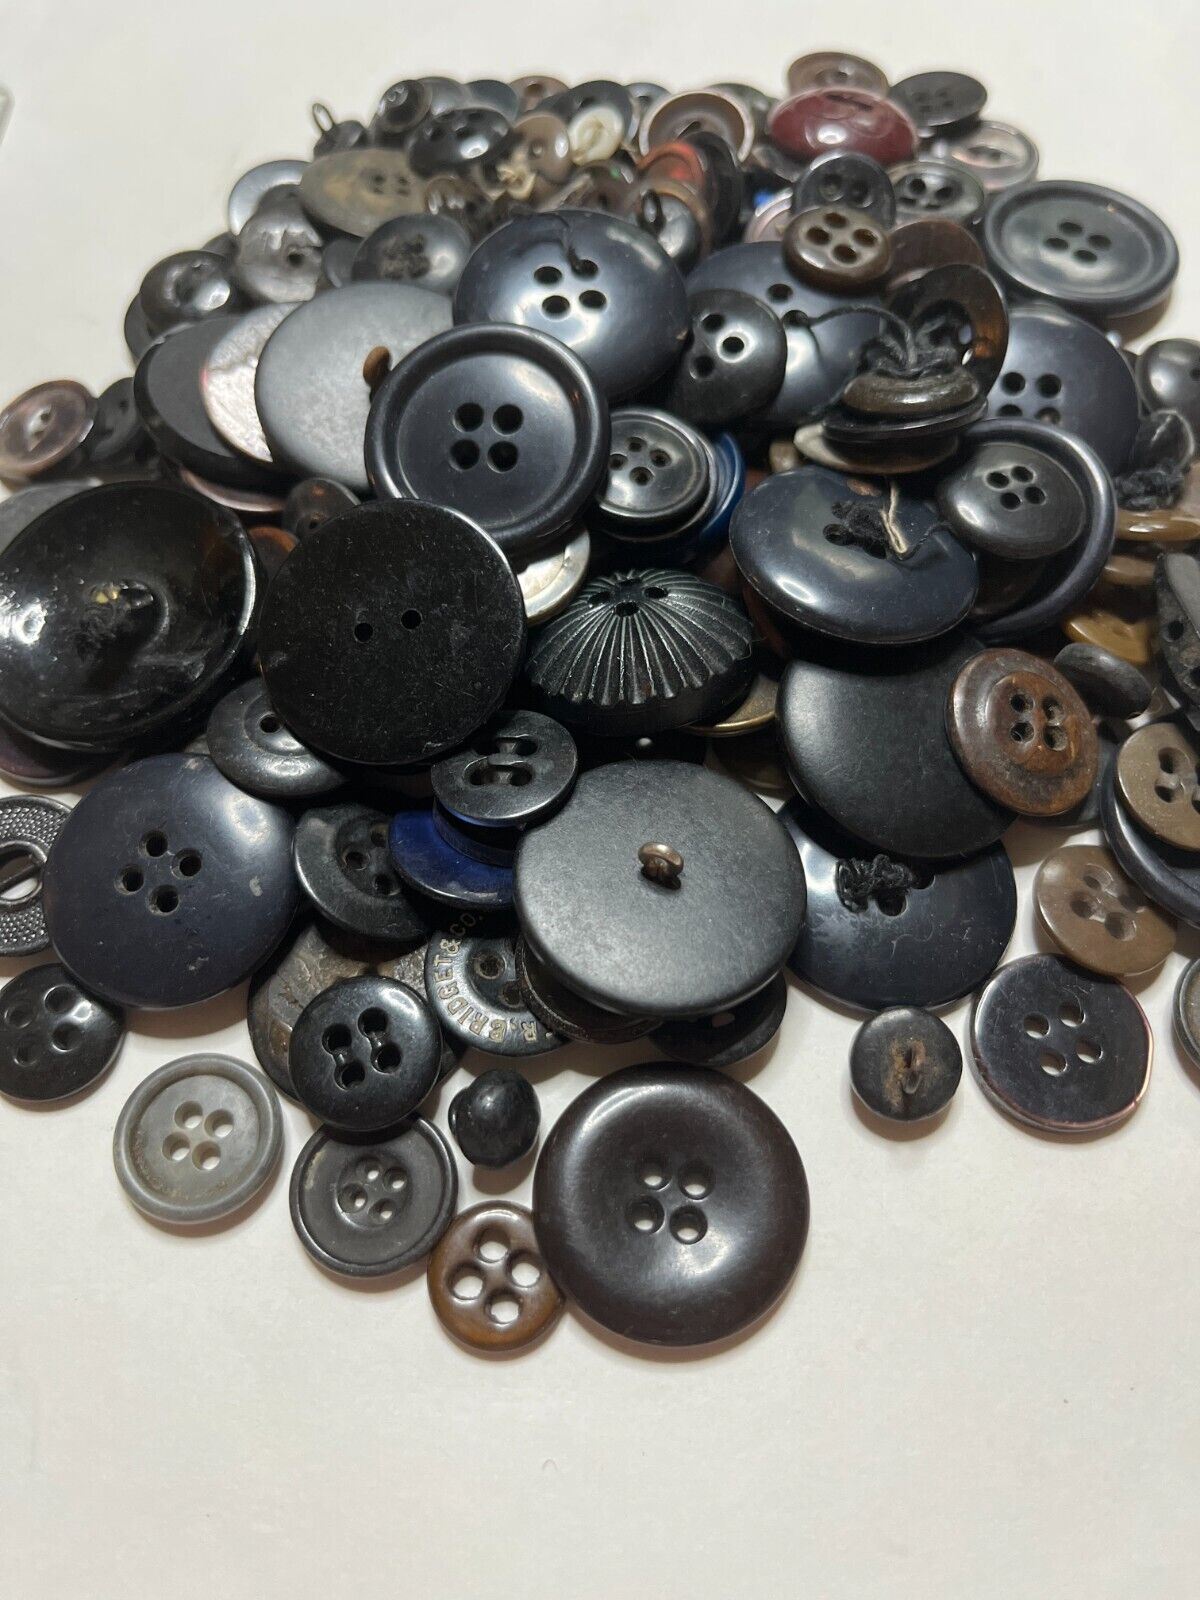 Lot of 150+ Antique/Vintage Black/Dark Buttons - Small/Medium Sizes